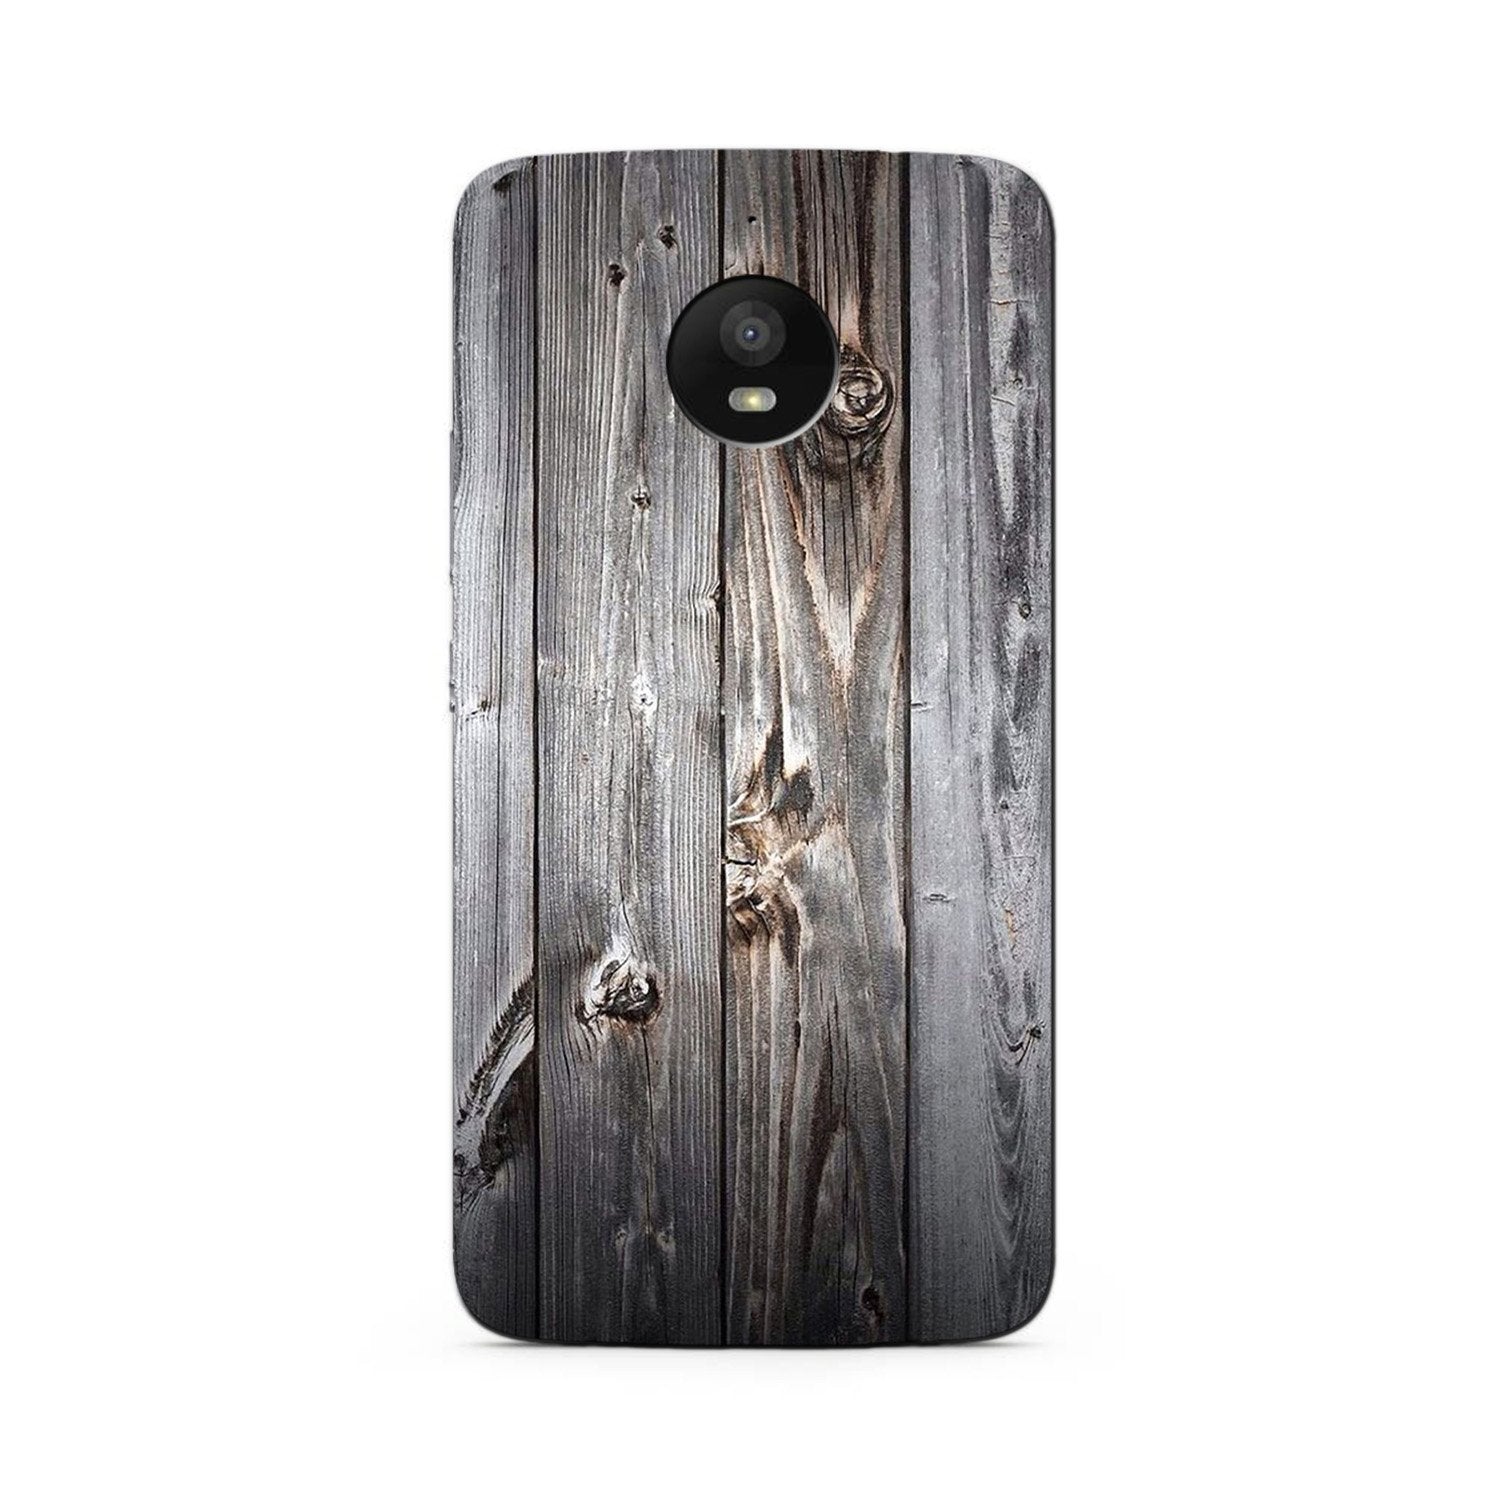 Wooden Look Case for Moto G5s Plus  (Design - 114)